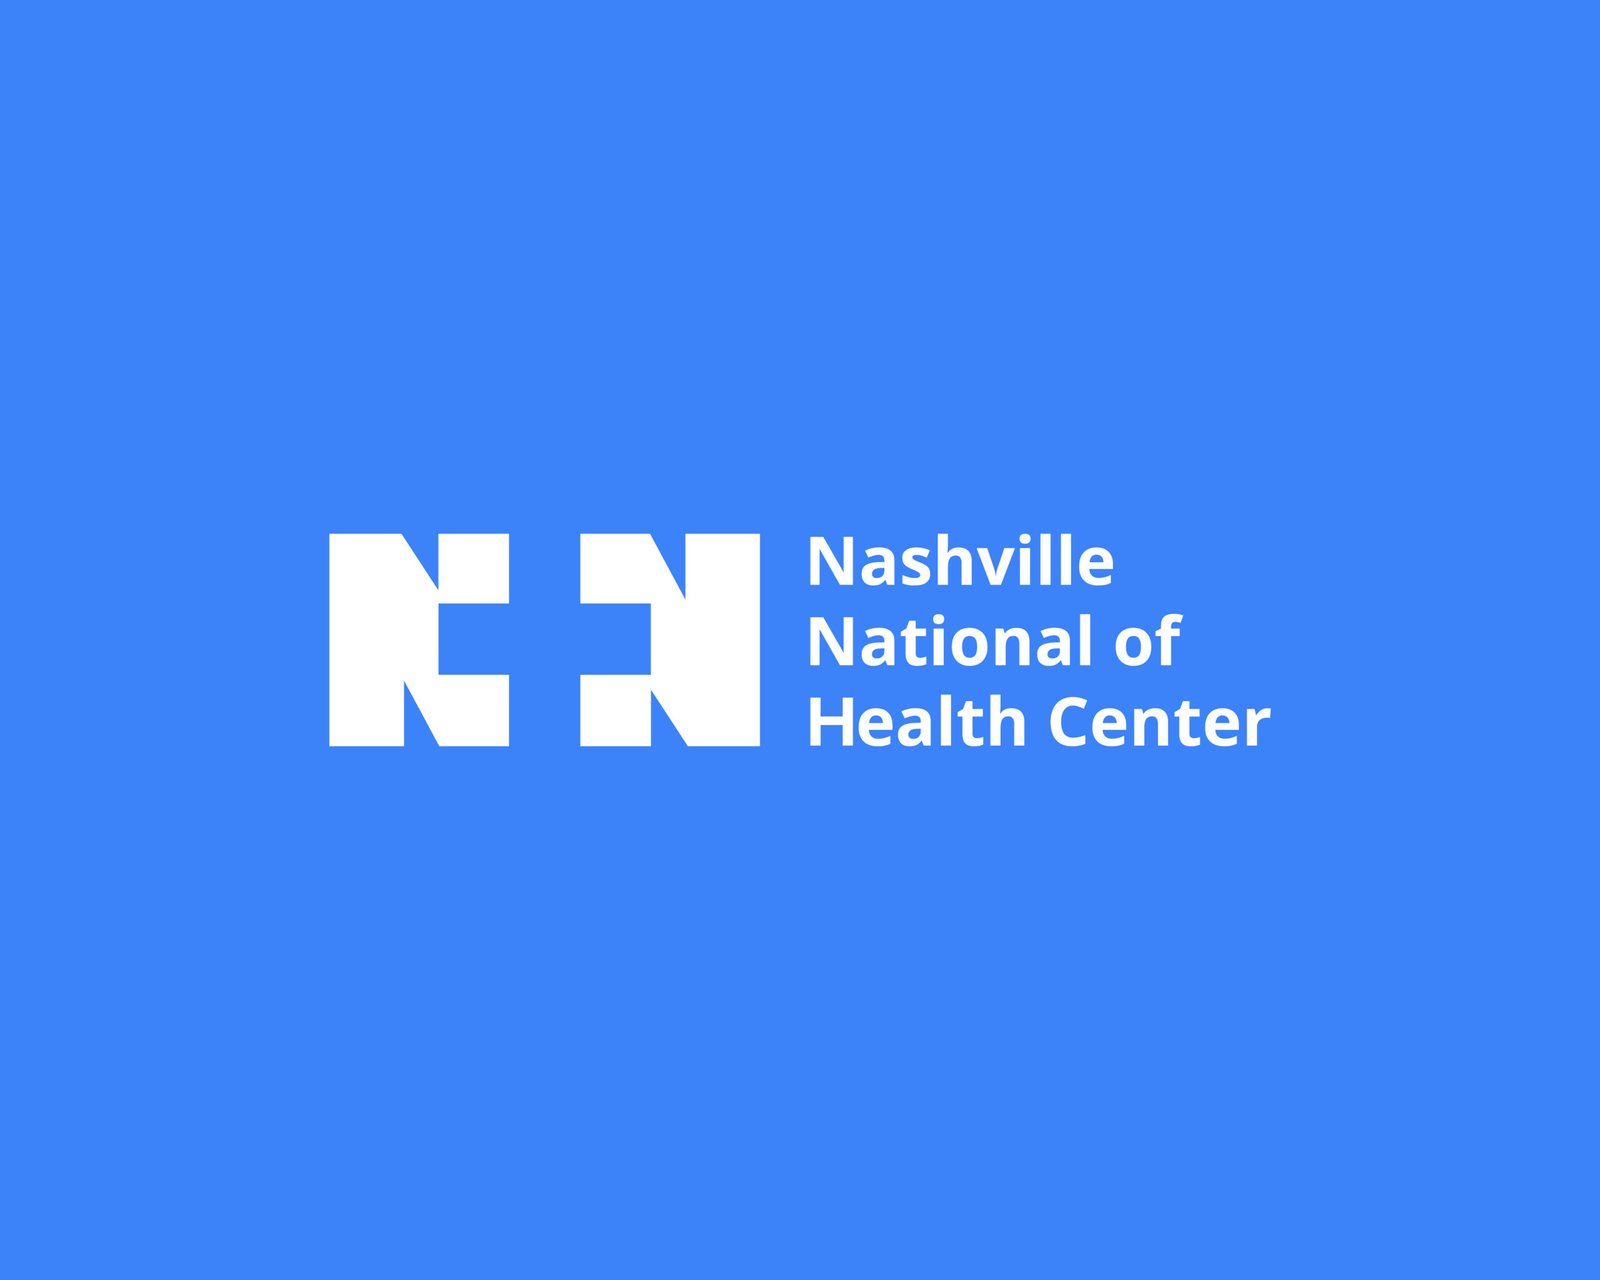 Nashville Medical Brand Identity Design